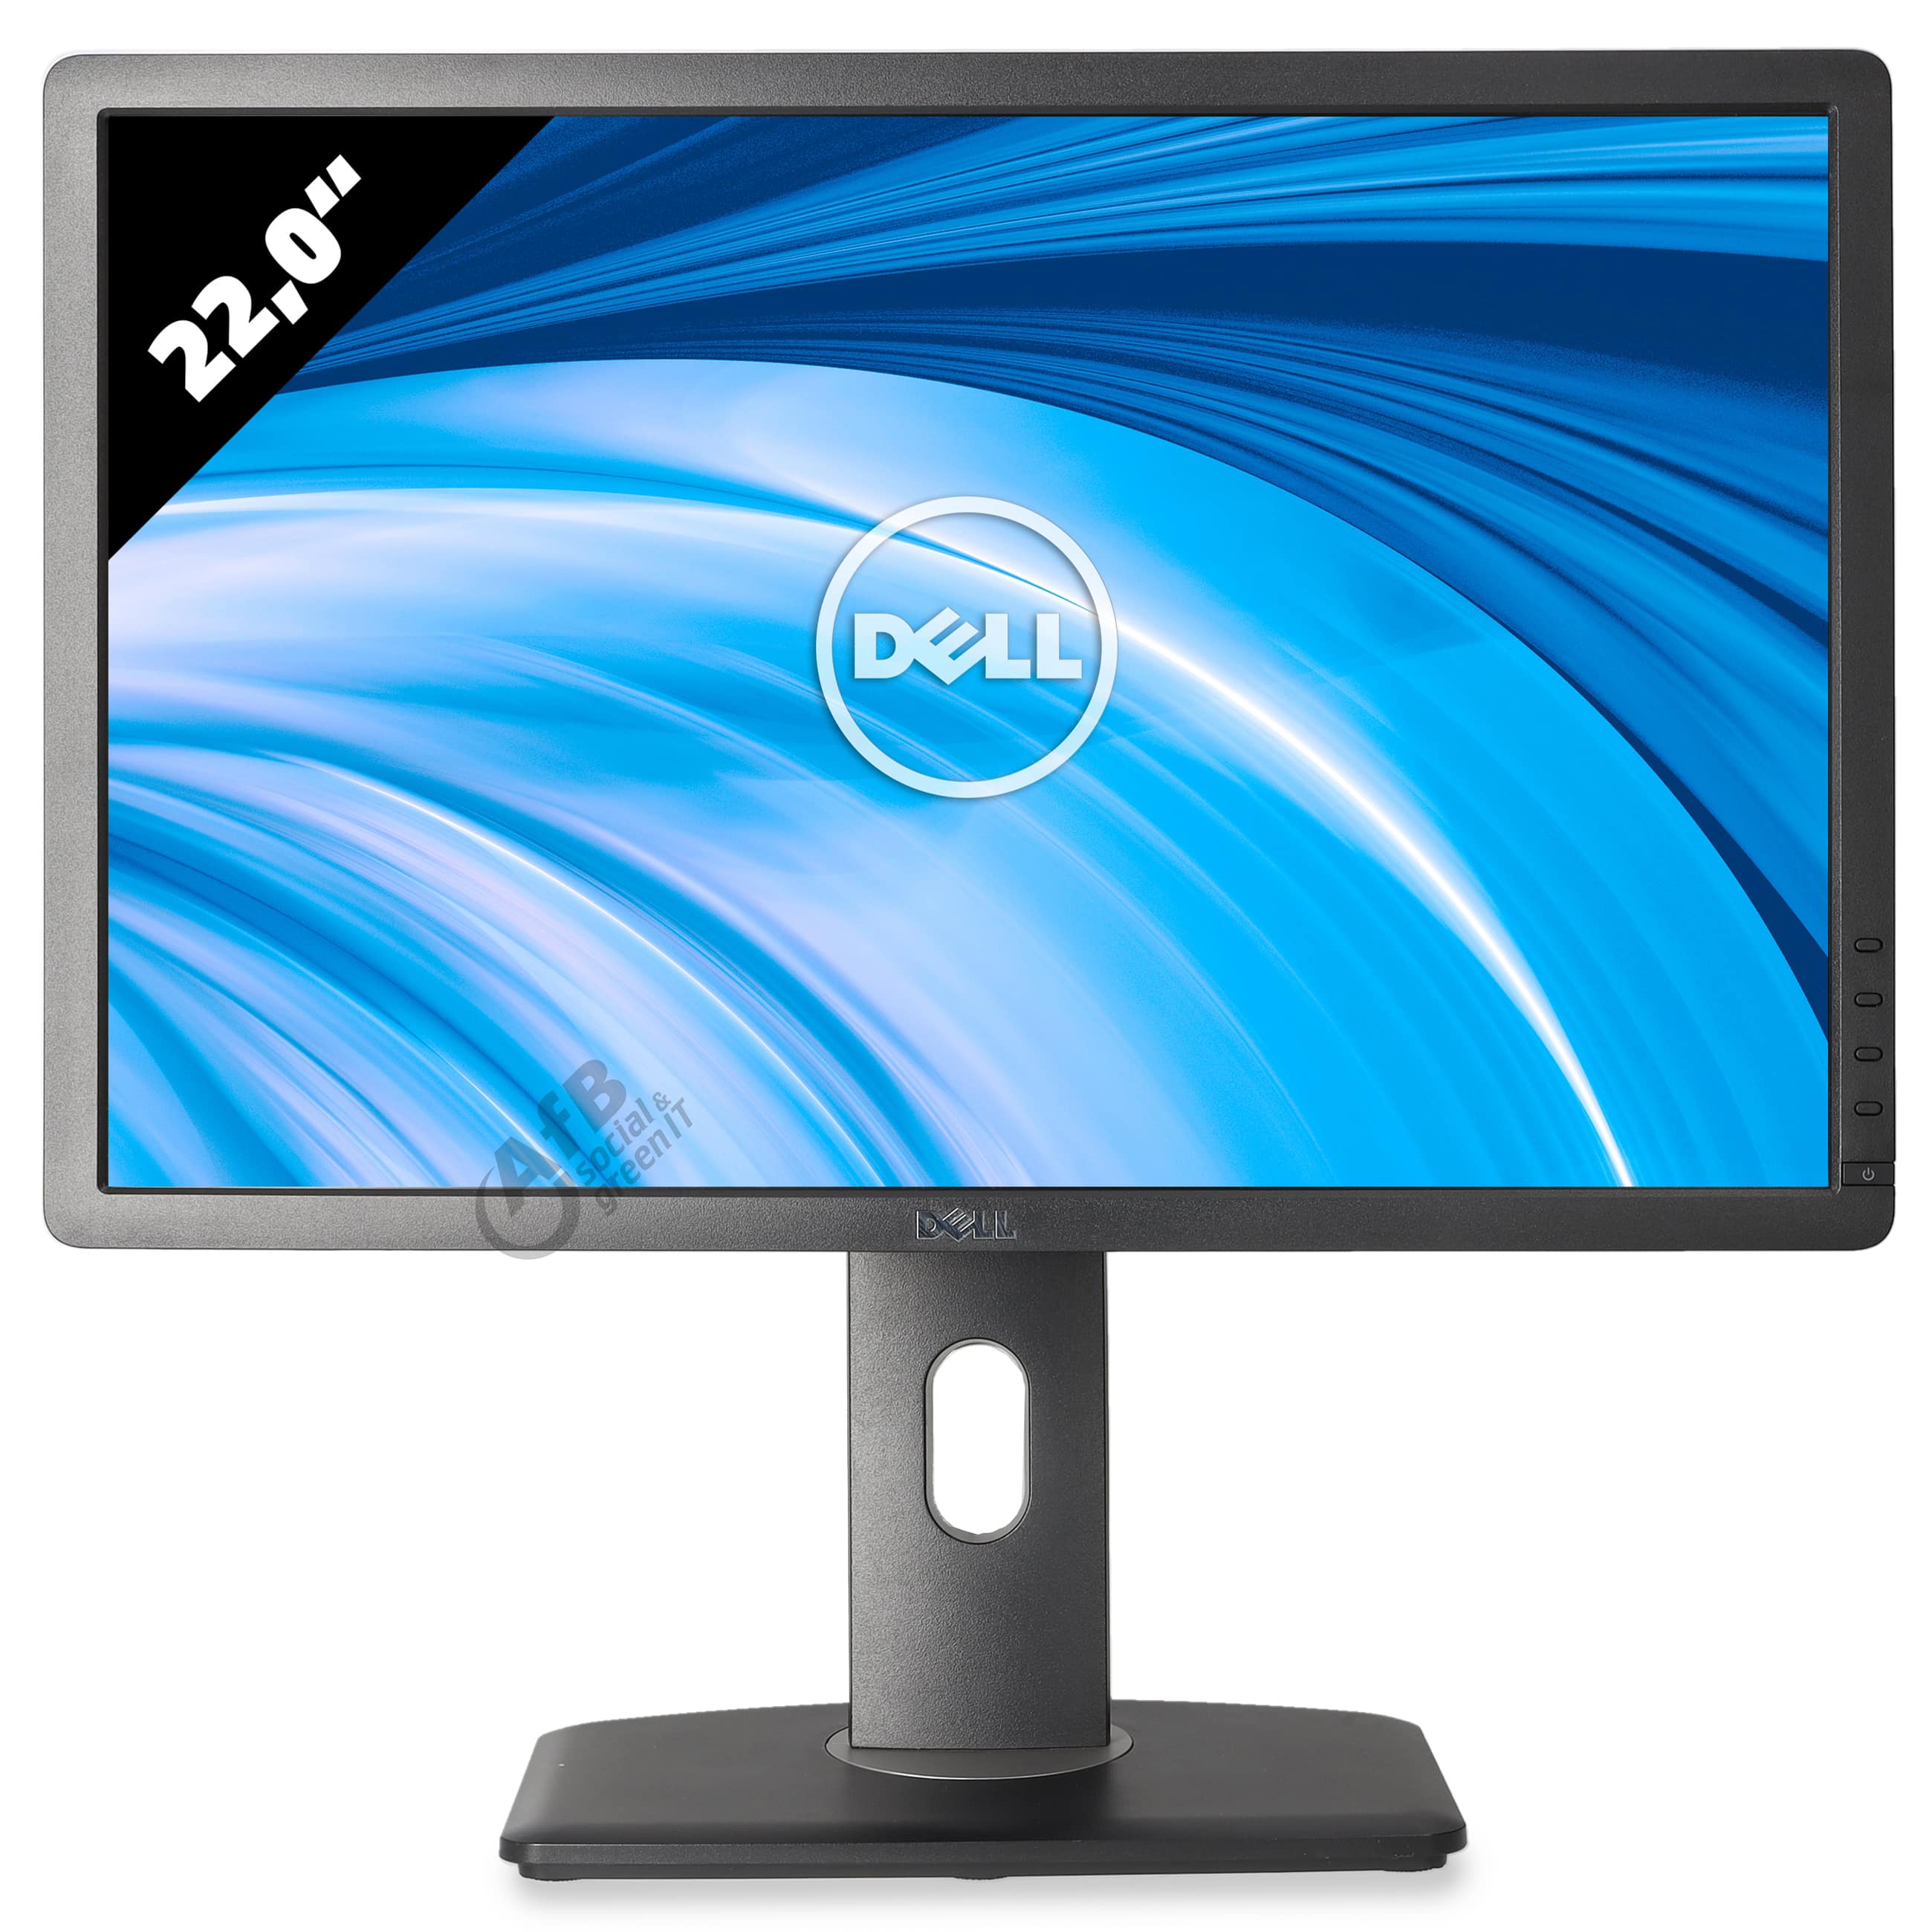 Dell Professional P2213 - 1680 x 1050 - WSXGA+ - 22,0 Zoll - 5 ms - Schwarz